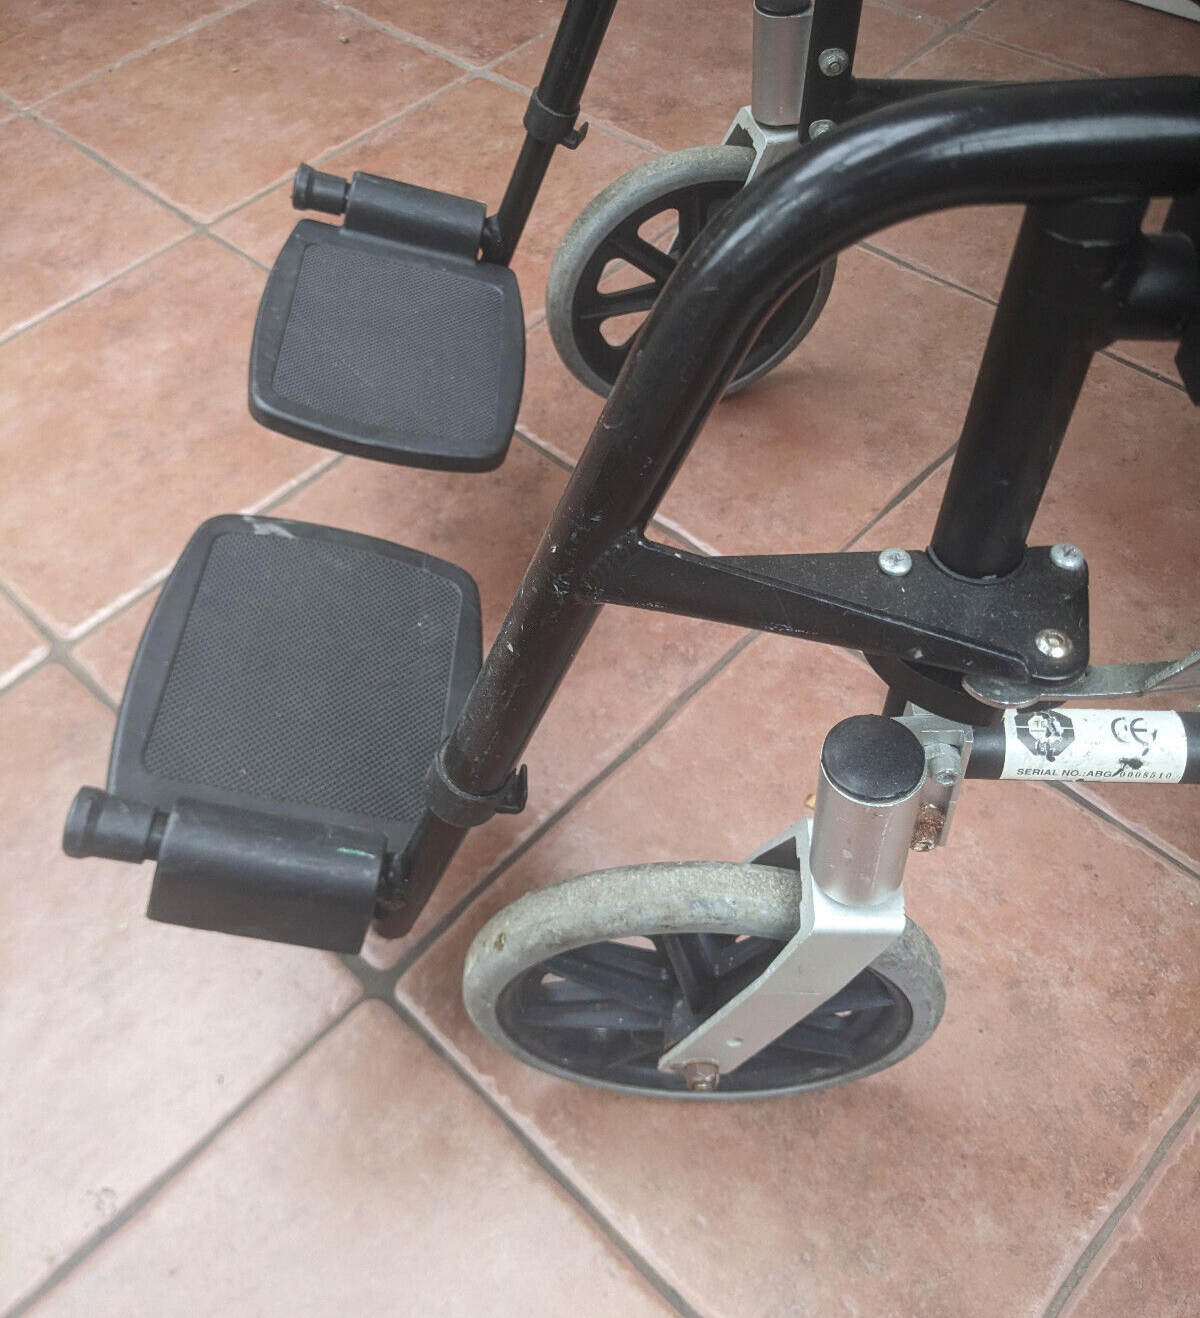 I-Go Flyte 90 Transit Wheelchair - Black foldable